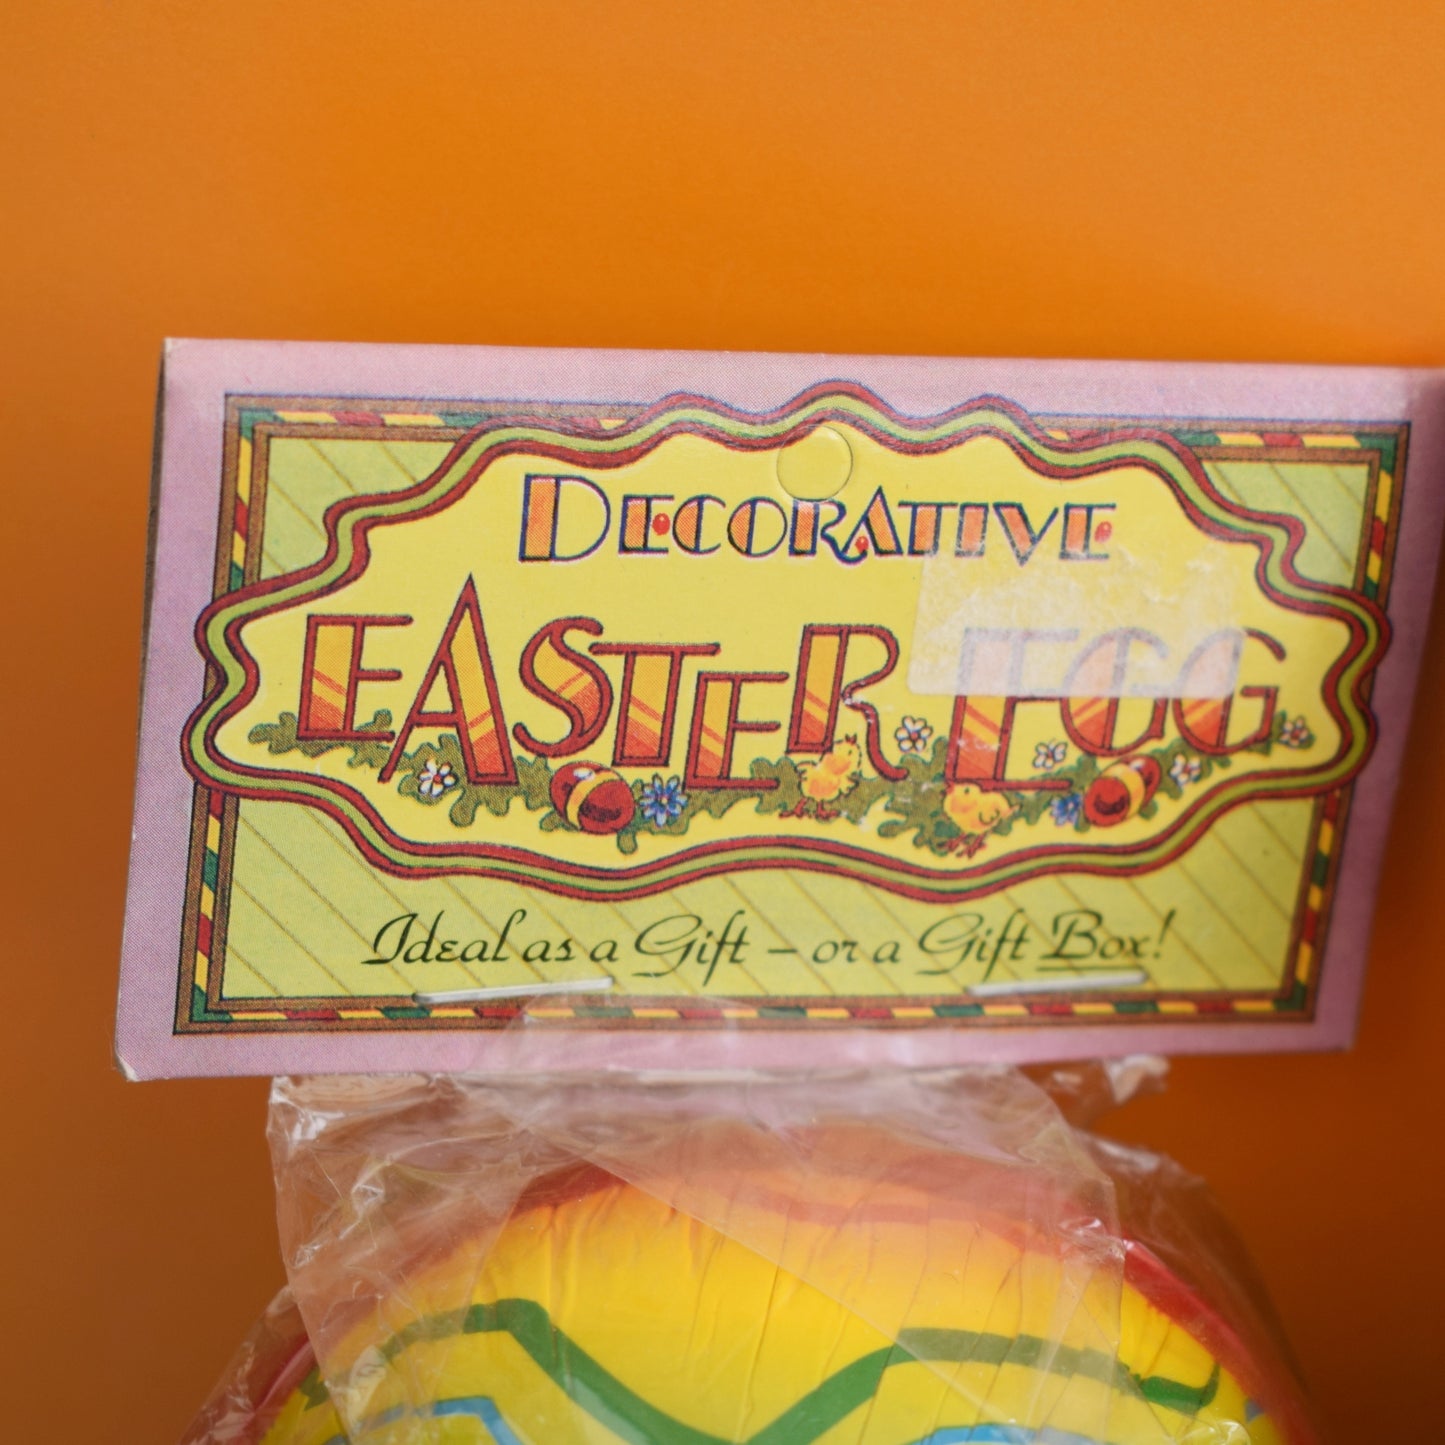 Vintage 1990s Cardboard Gift Box Easter Eggs - Unused